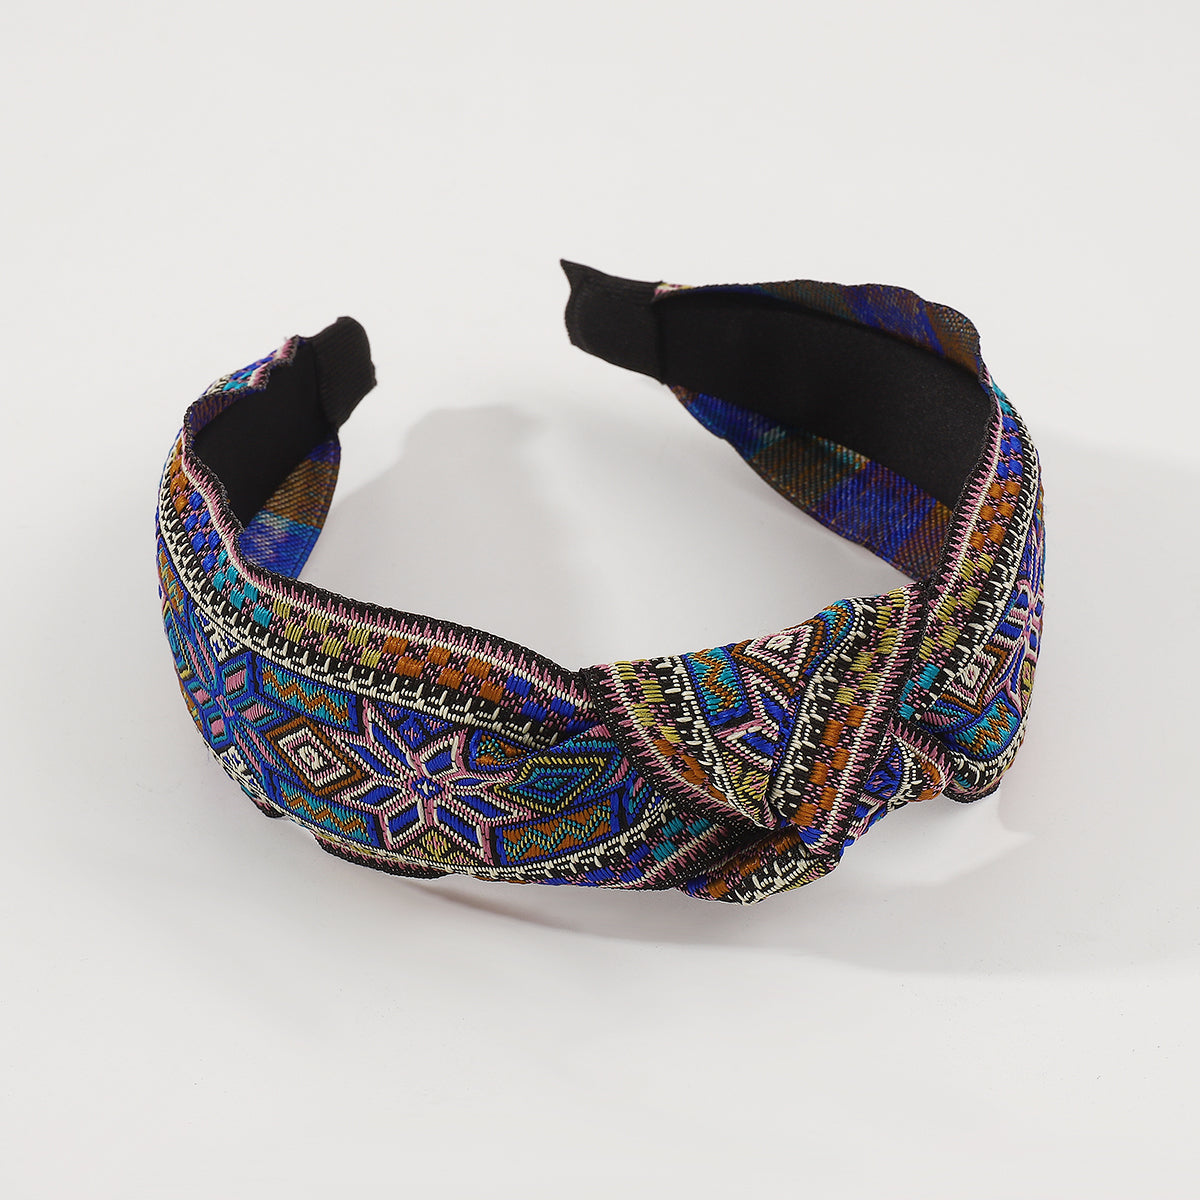 Retro Headband Embroidery Knotted Hairbands medyjewelry